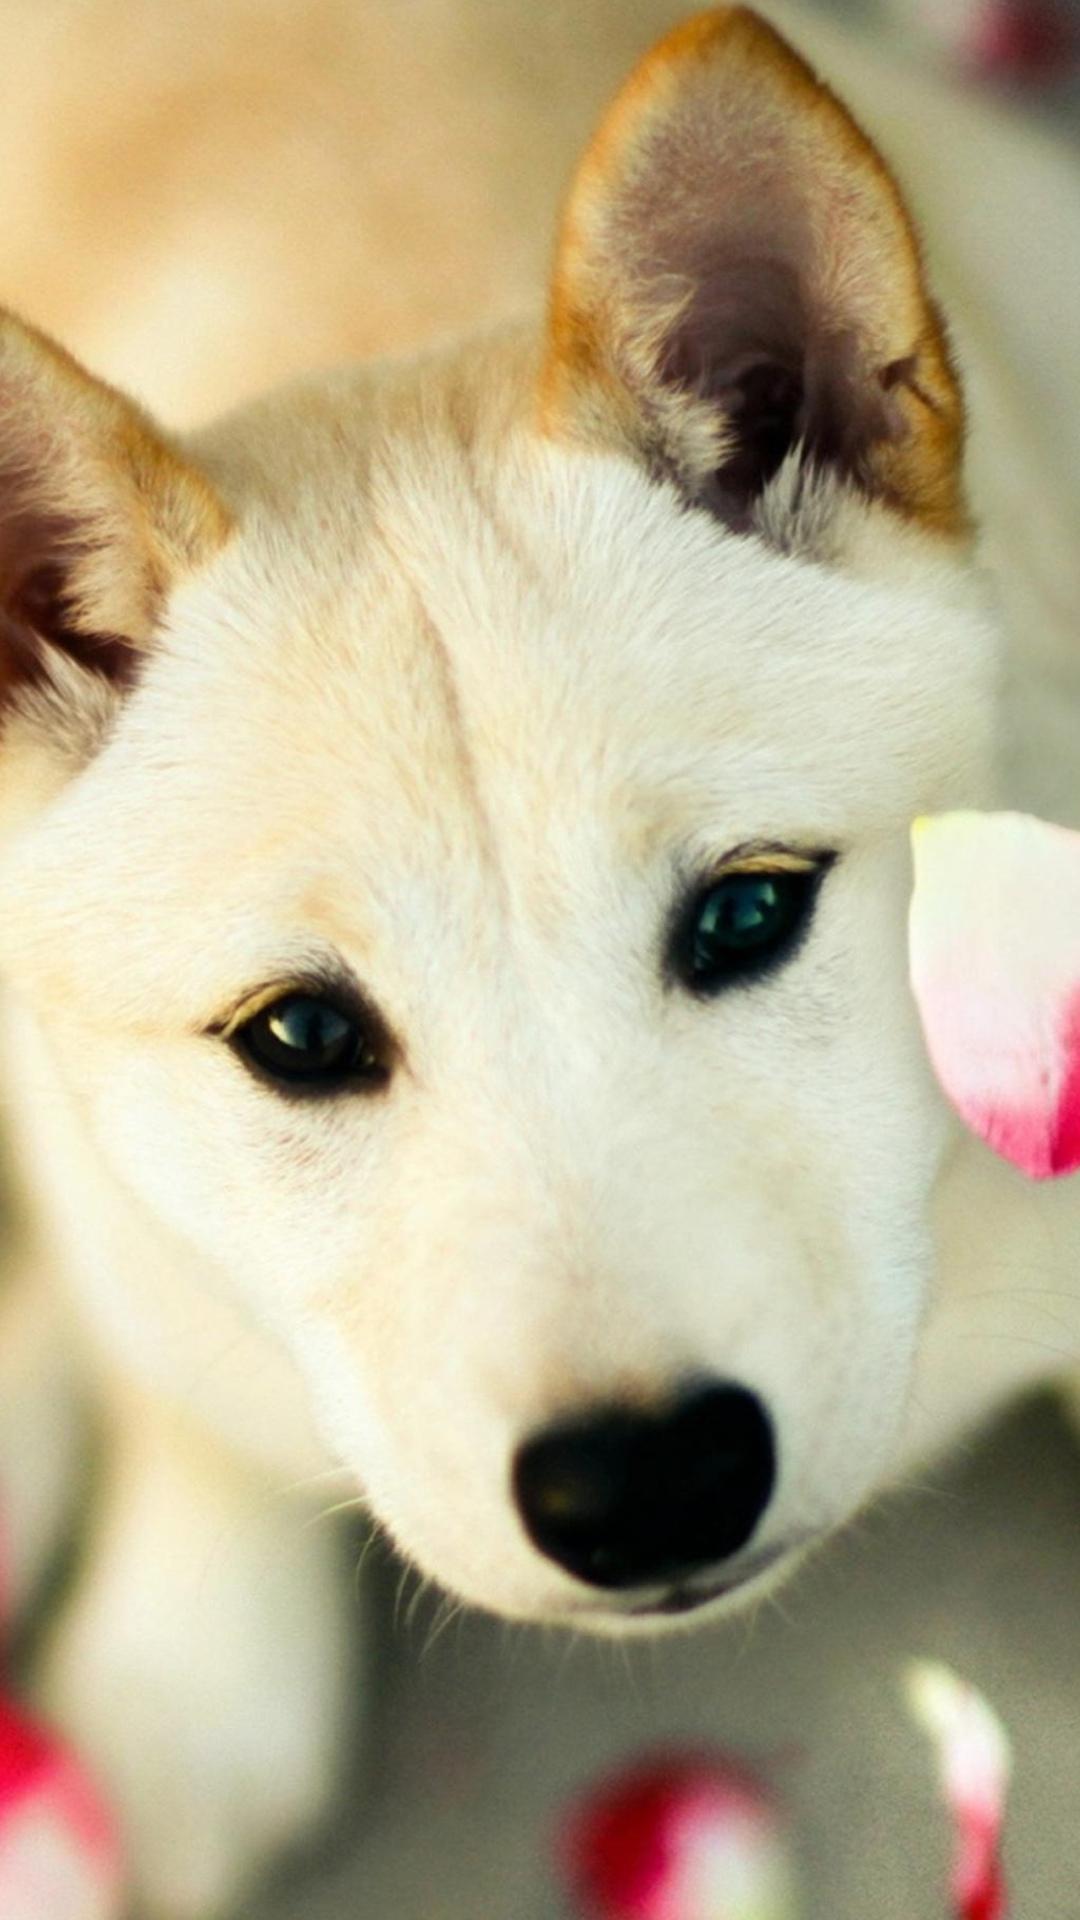 Cute Dog Pink Petals Android Wallpaper free download